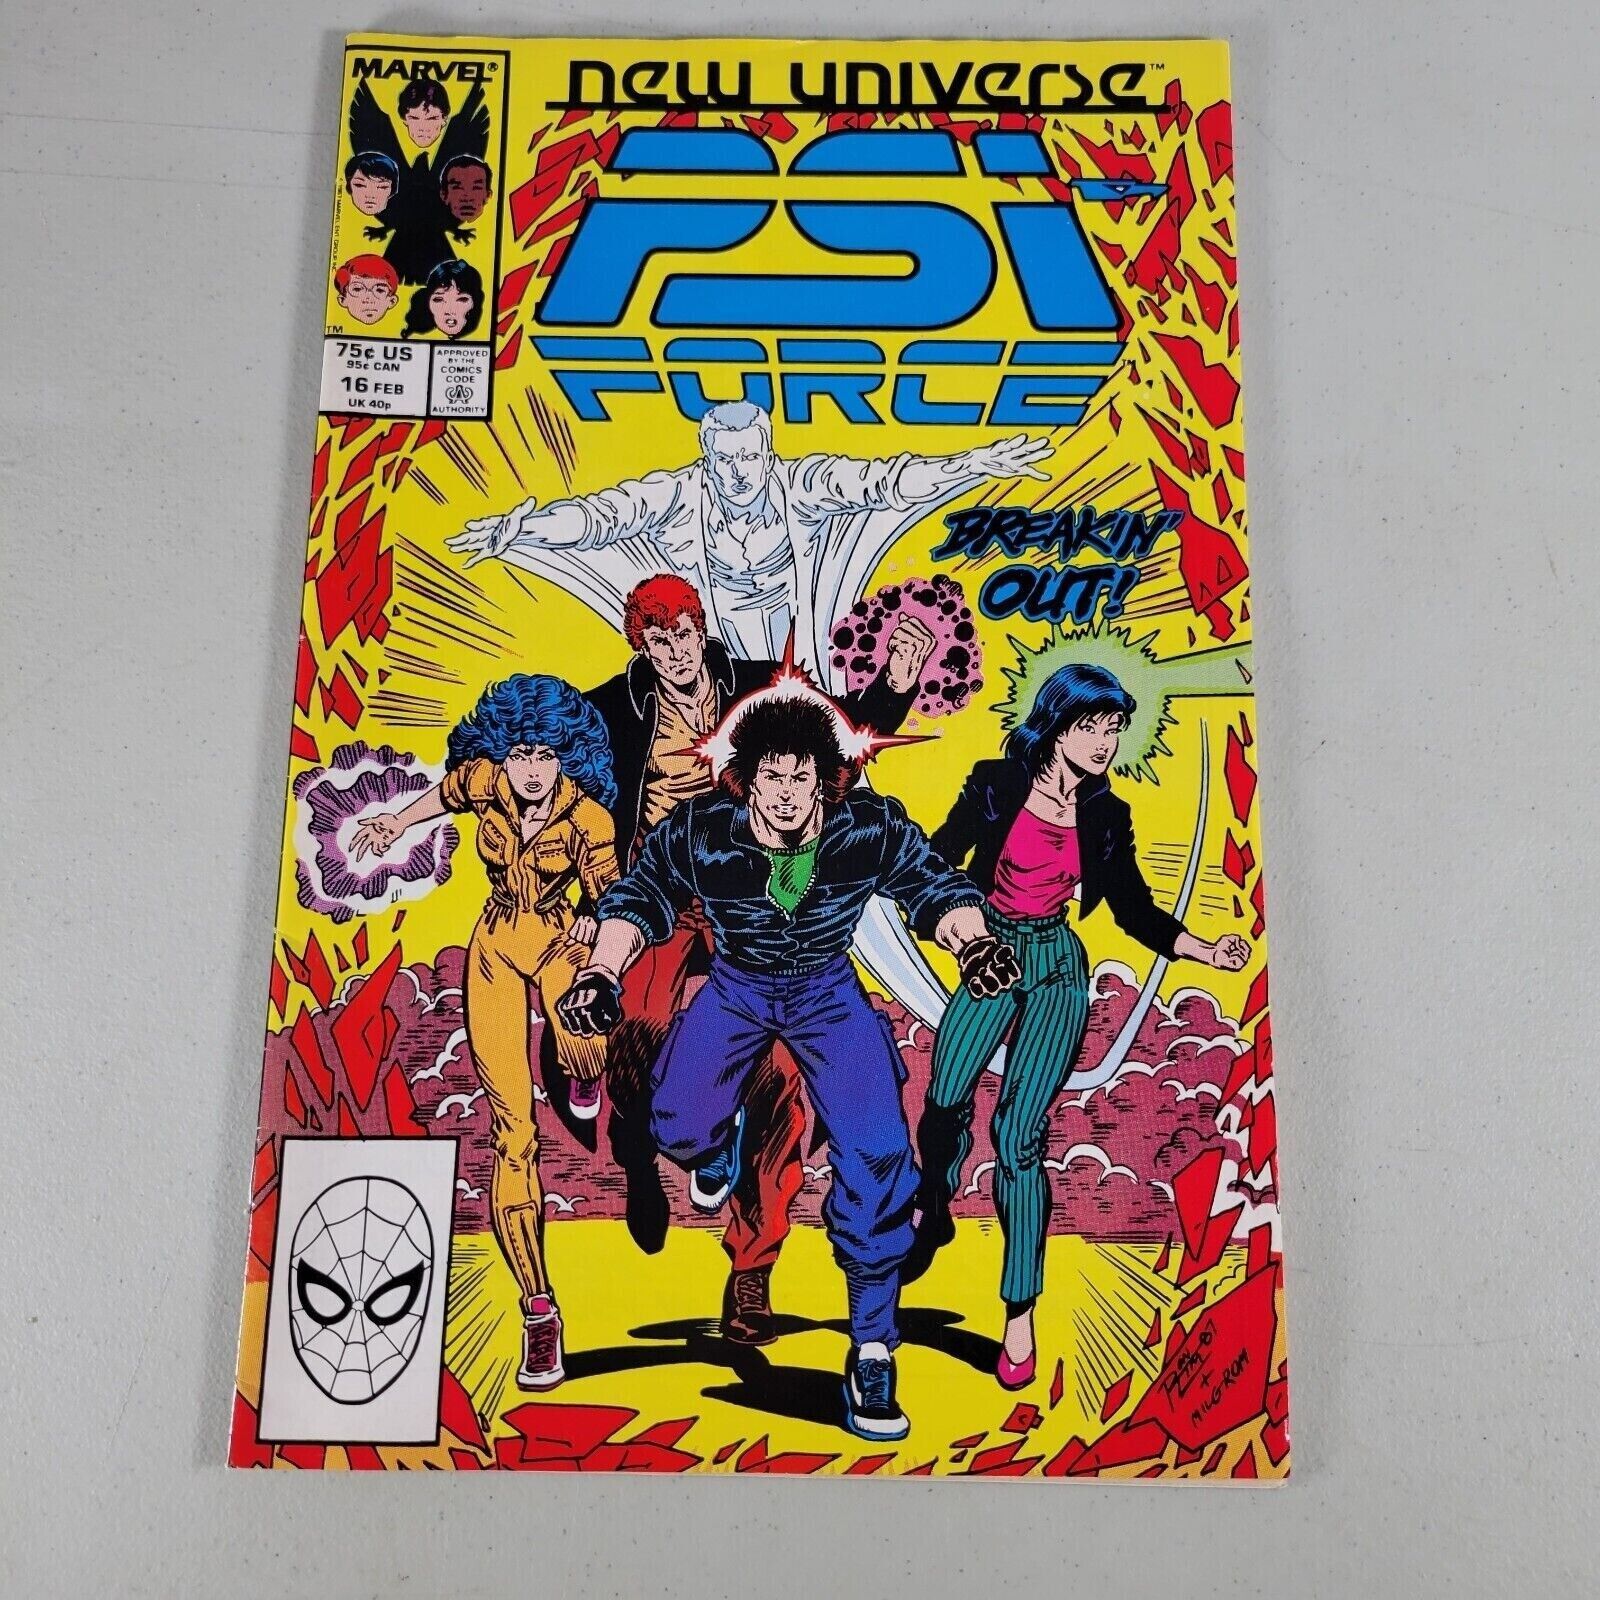 PSI Force Comic Book Marvel New Universe Feb 16 Vol 1 #16 1988 - $5.99